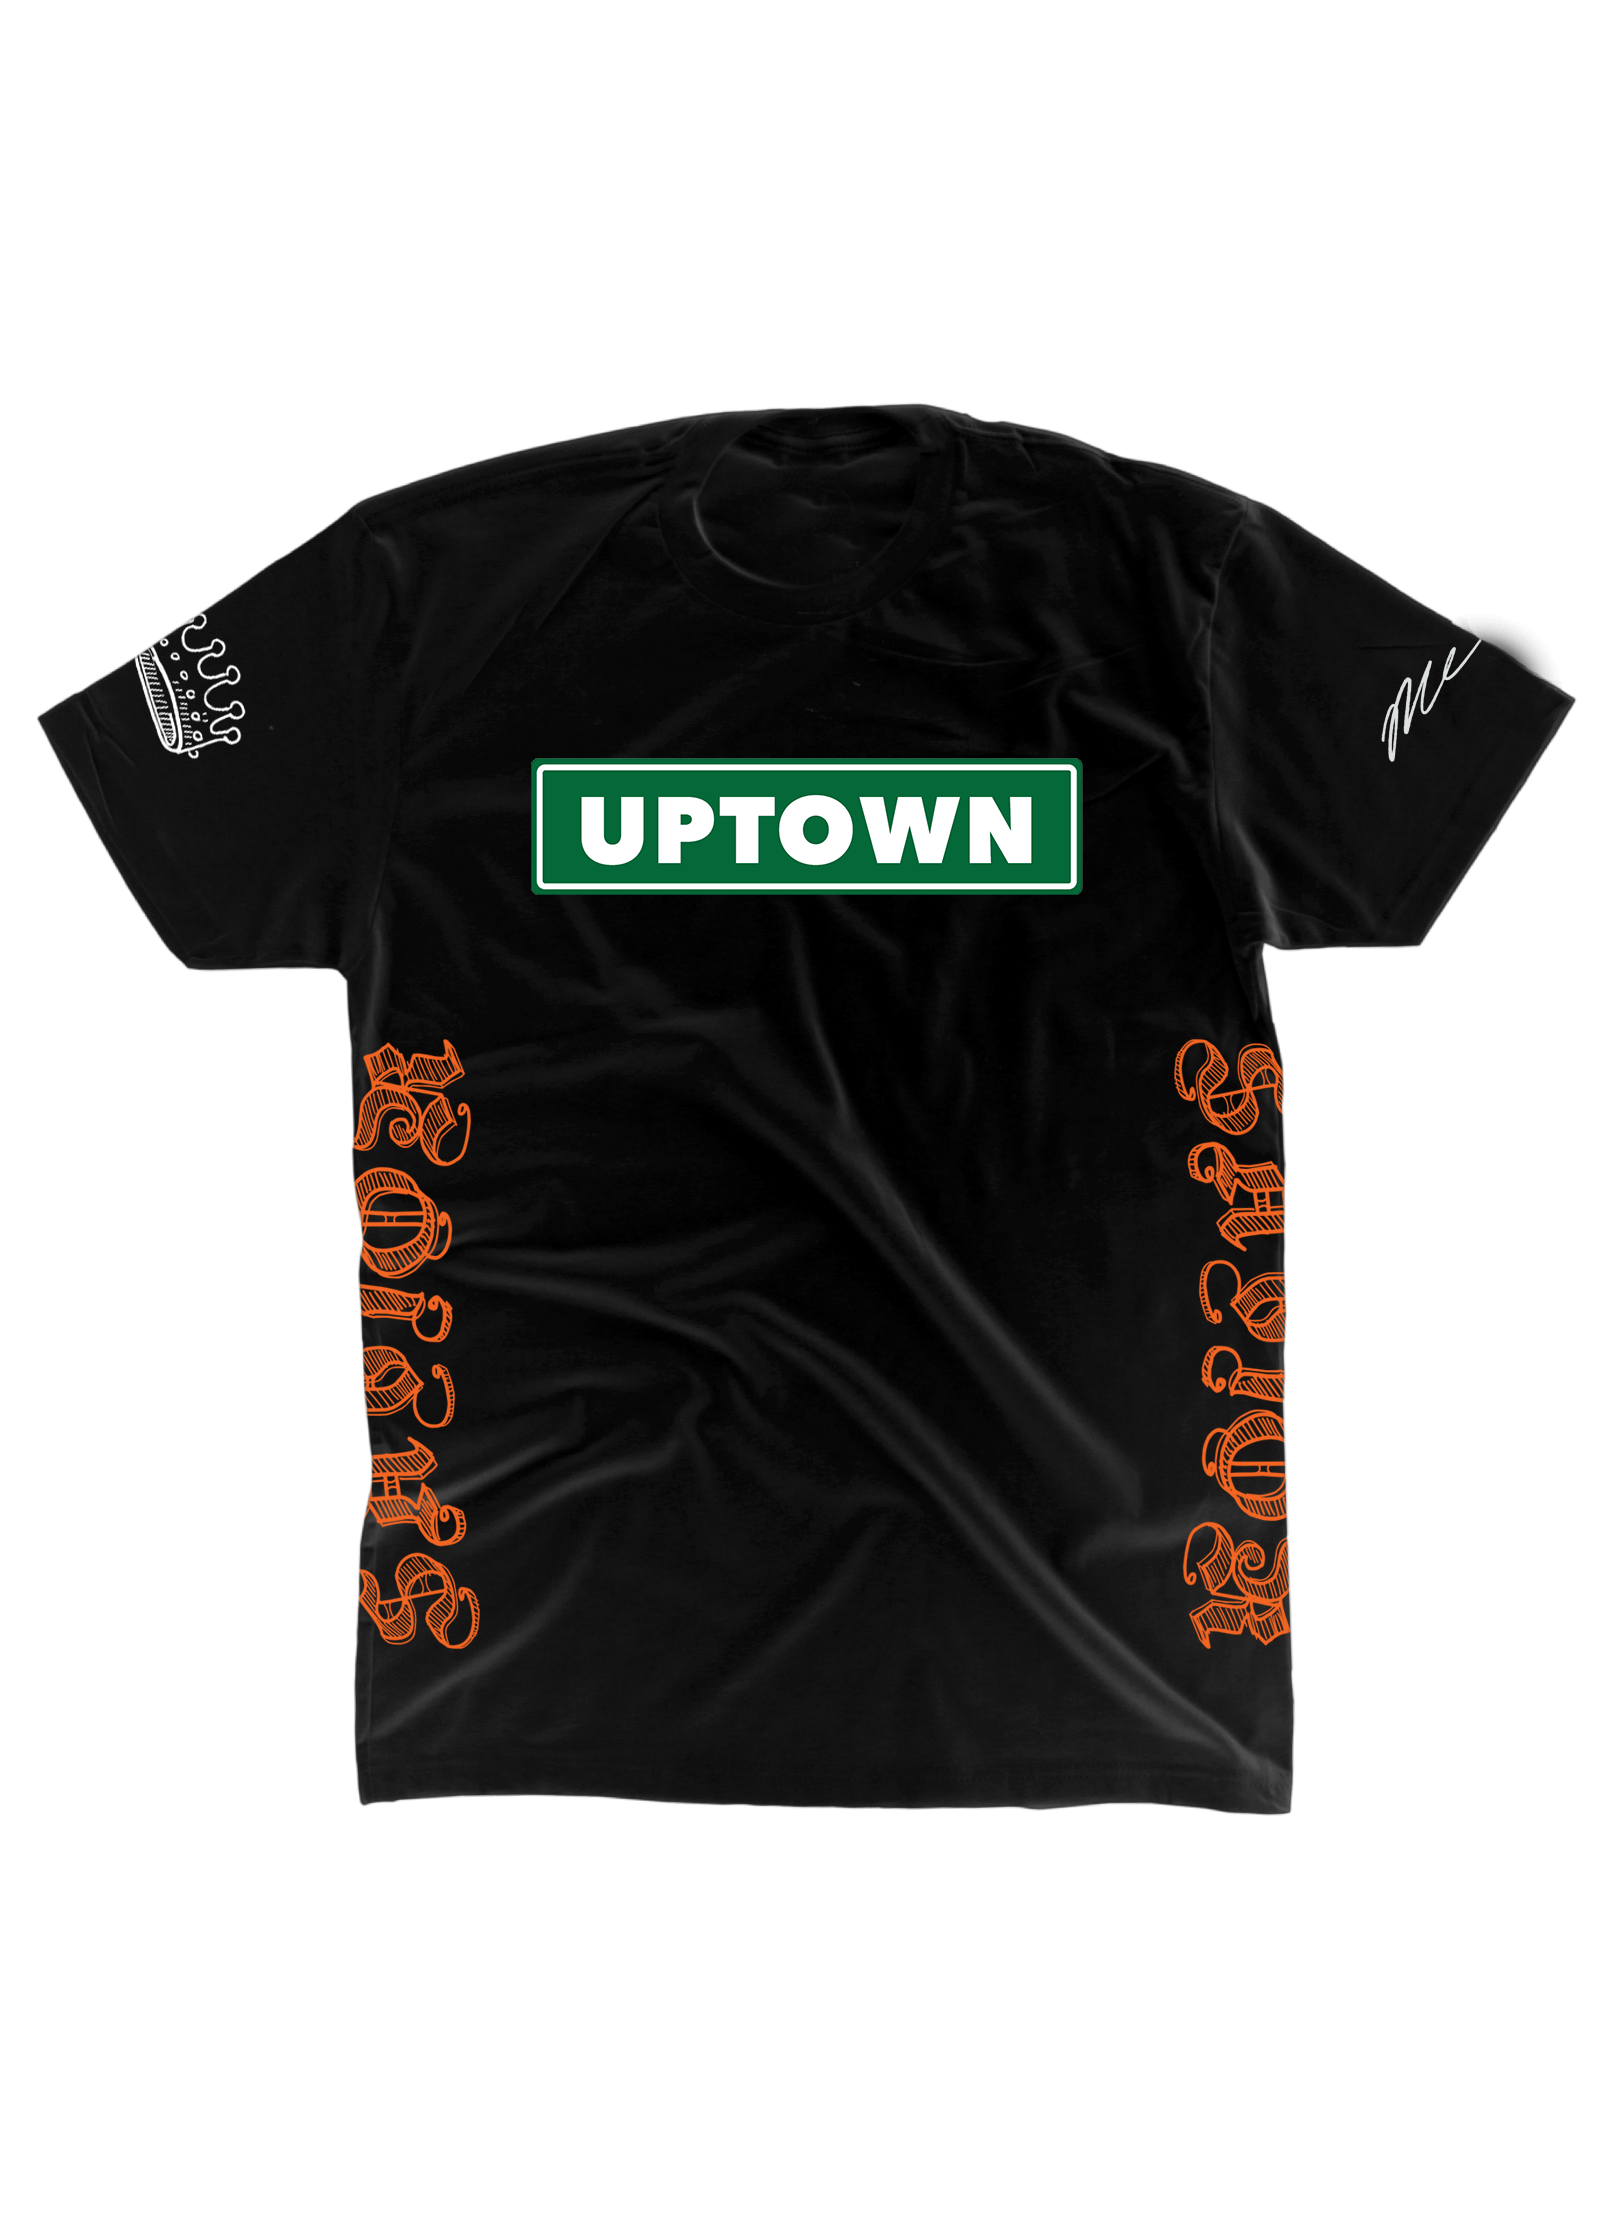 Uptown Boyz x Savior Collab Shirt - Signedbymcfly